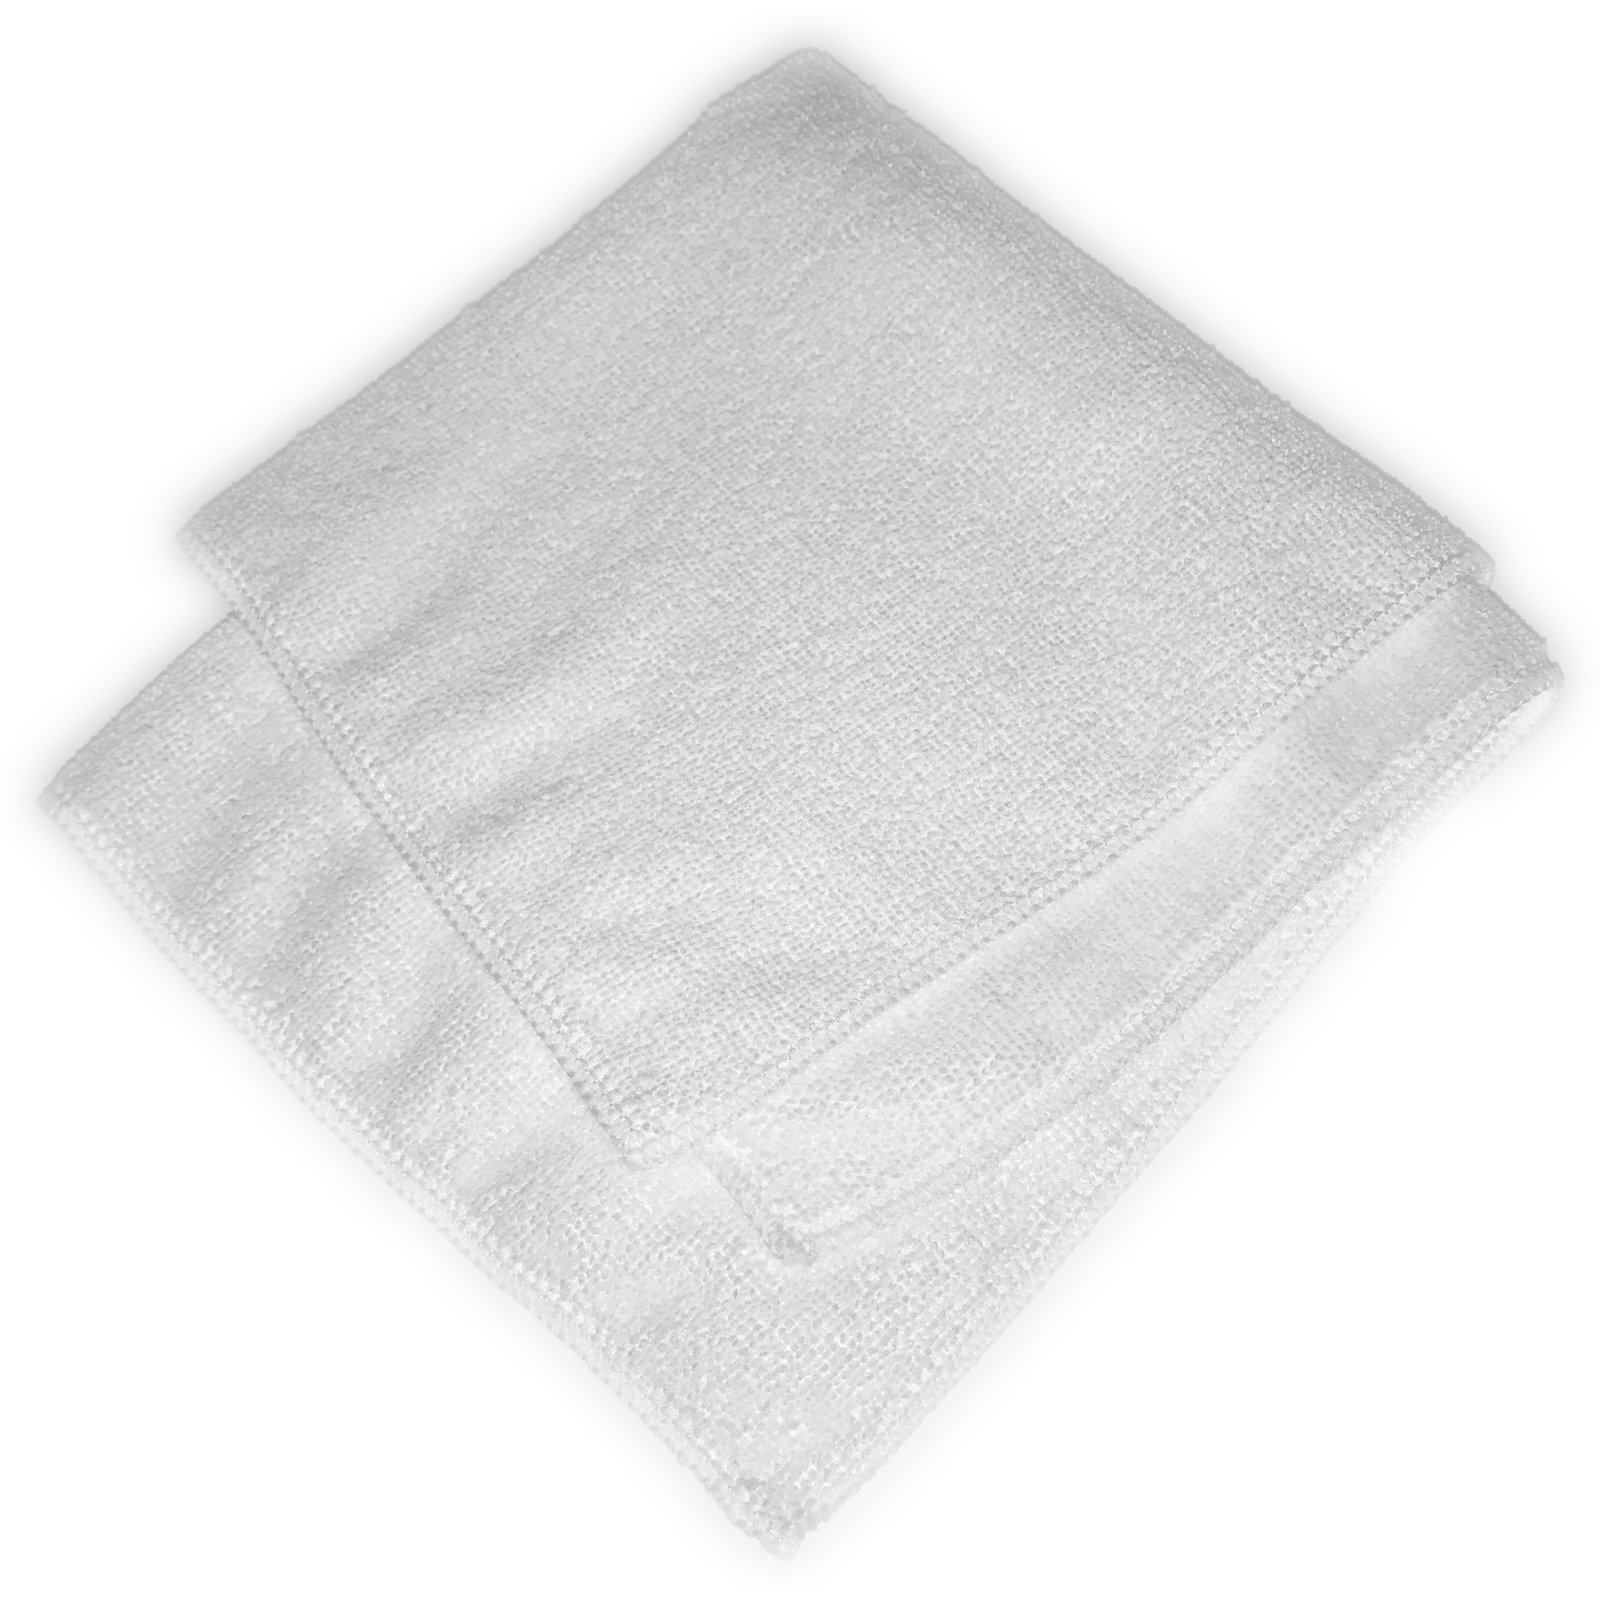 Gray Terry Microfiber Towels